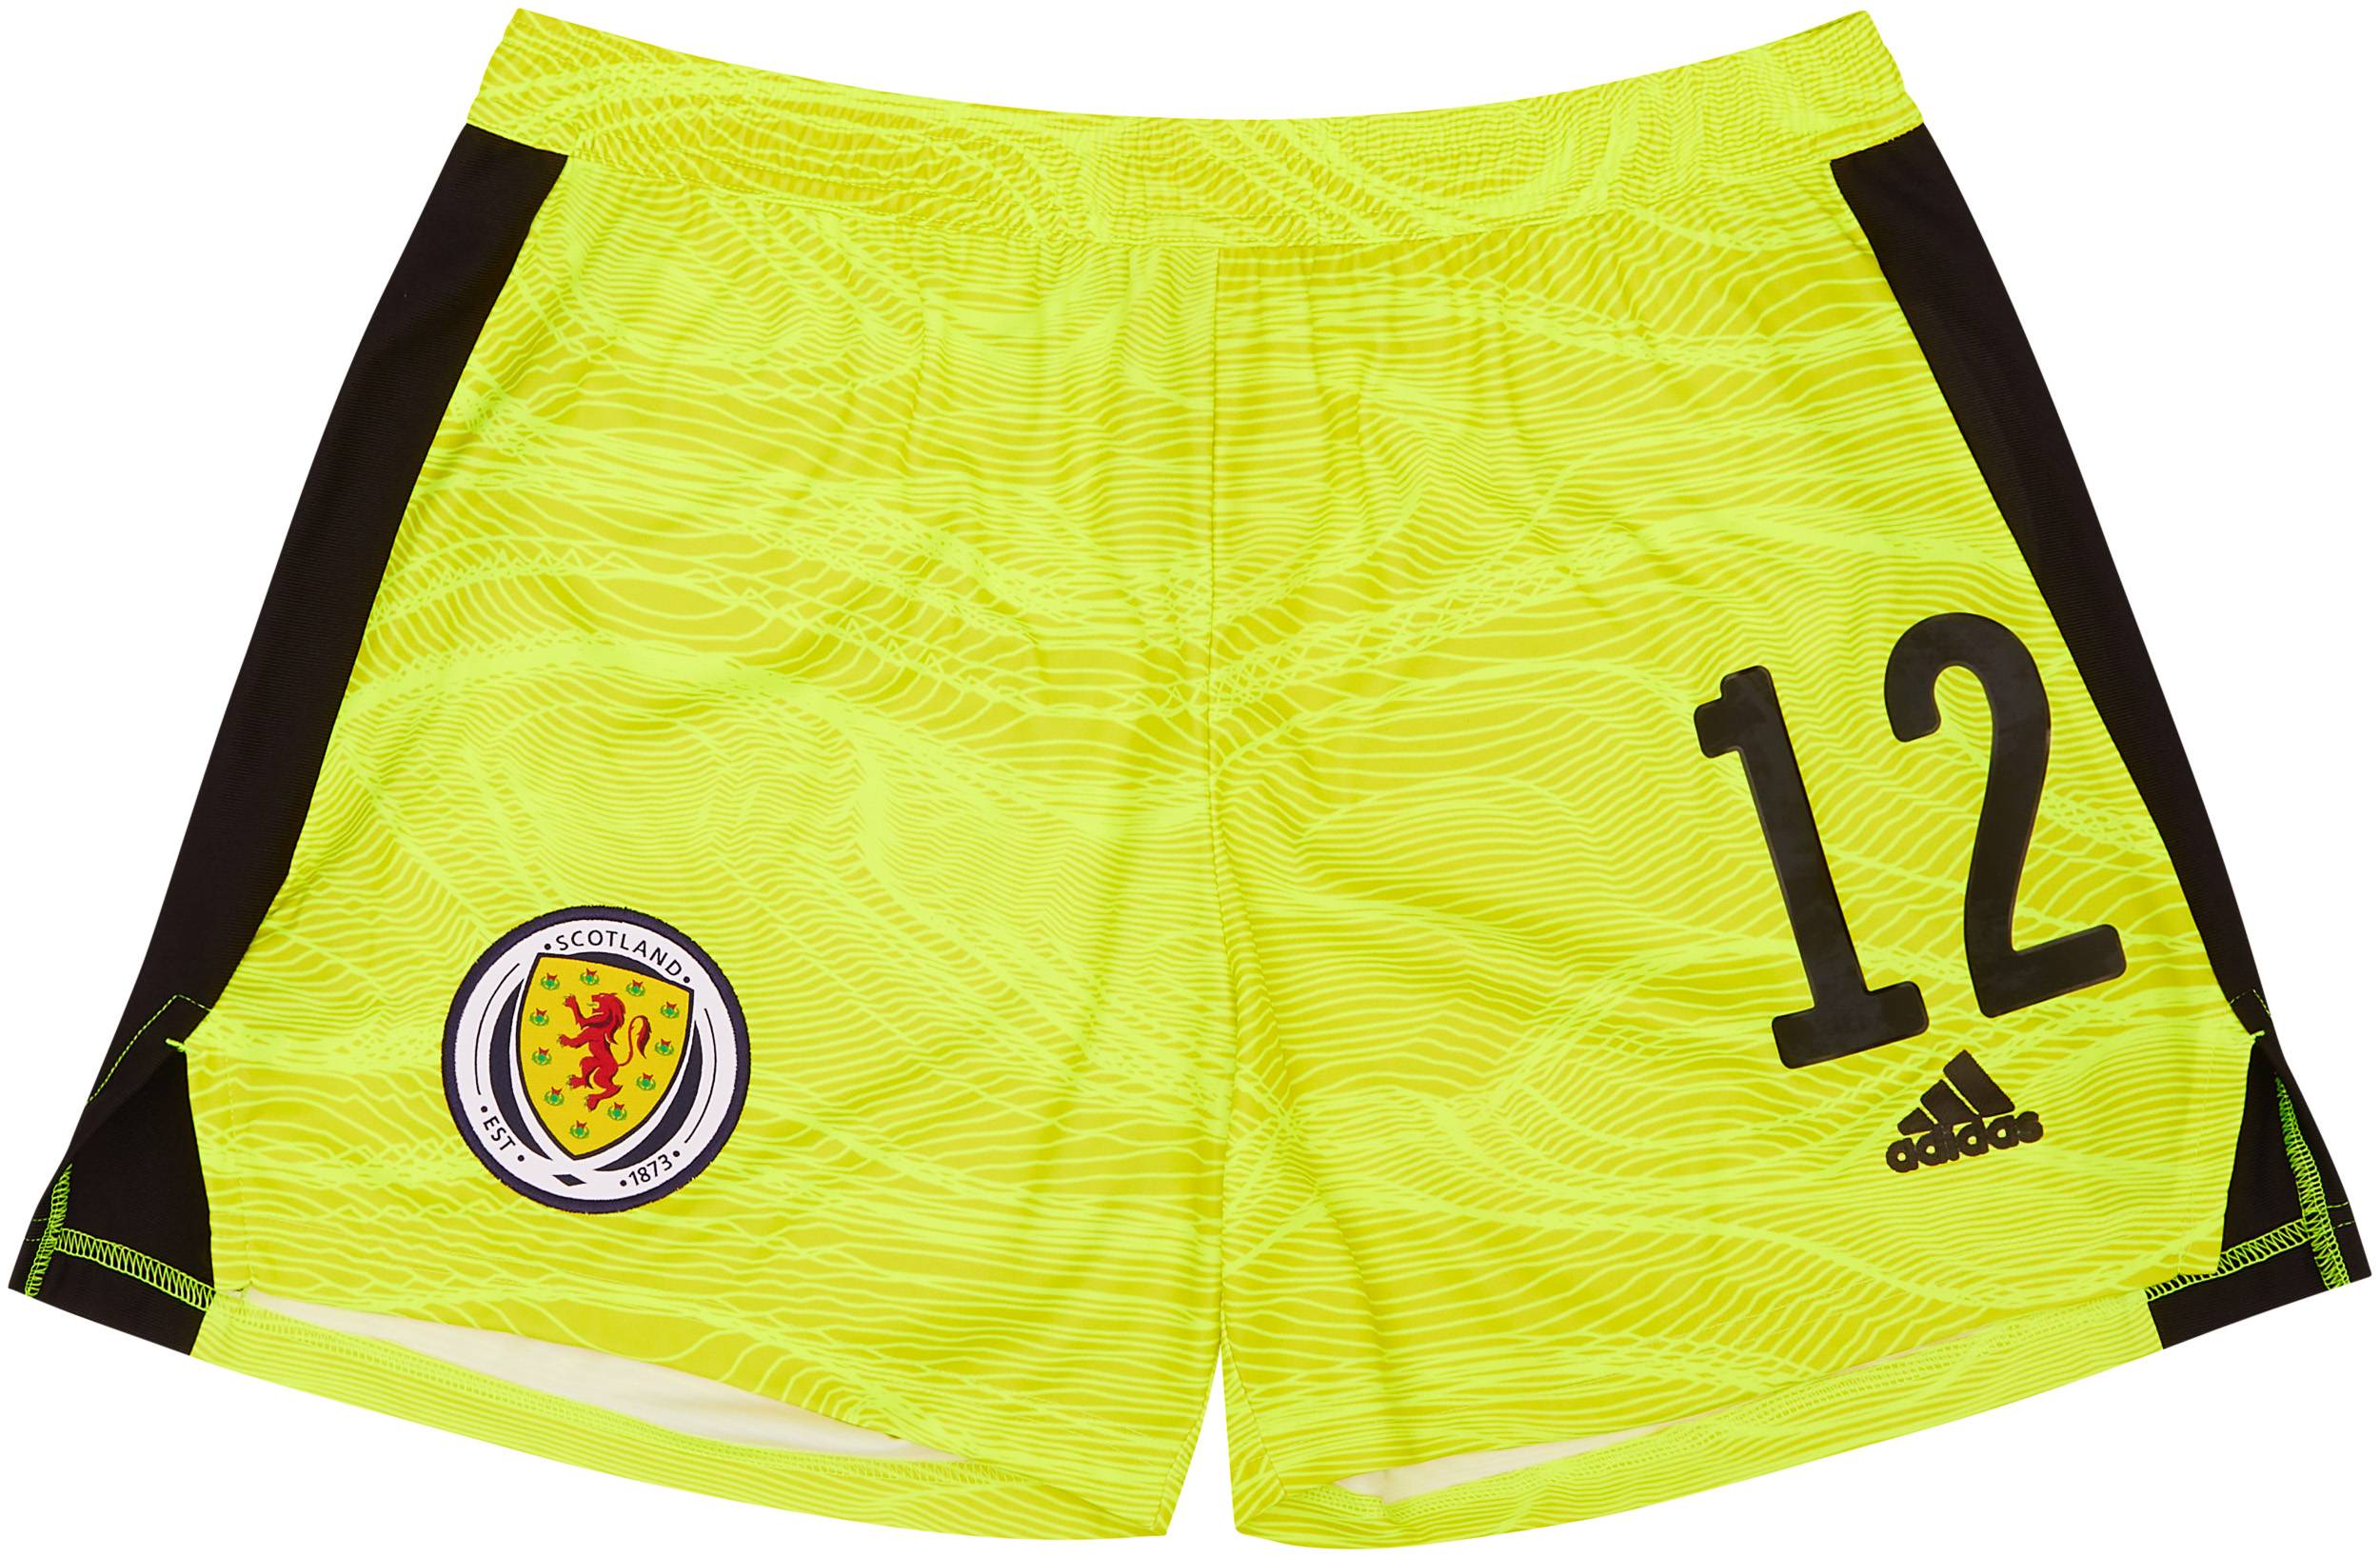 2021-22 Scotland GK Shorts #12 (Fife) Womens (M)